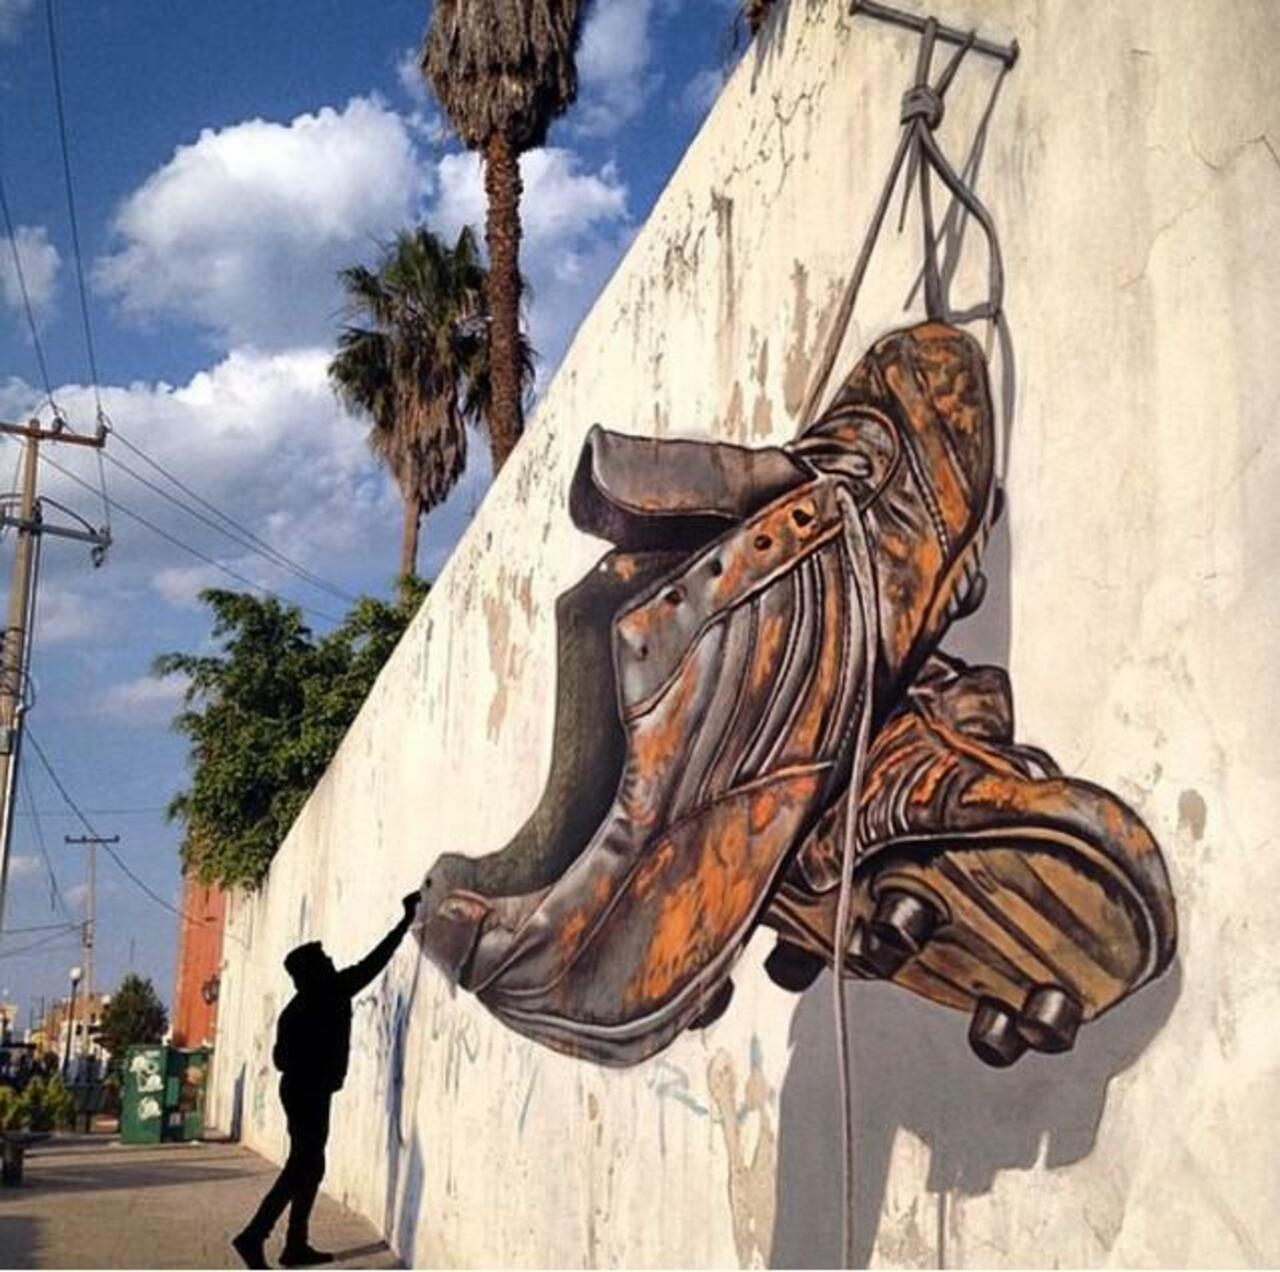 Awesome anamorphic 3D Street Art by Juandres Vera 

#art #graffiti #mural #streetart http://t.co/P59T7XSrCp